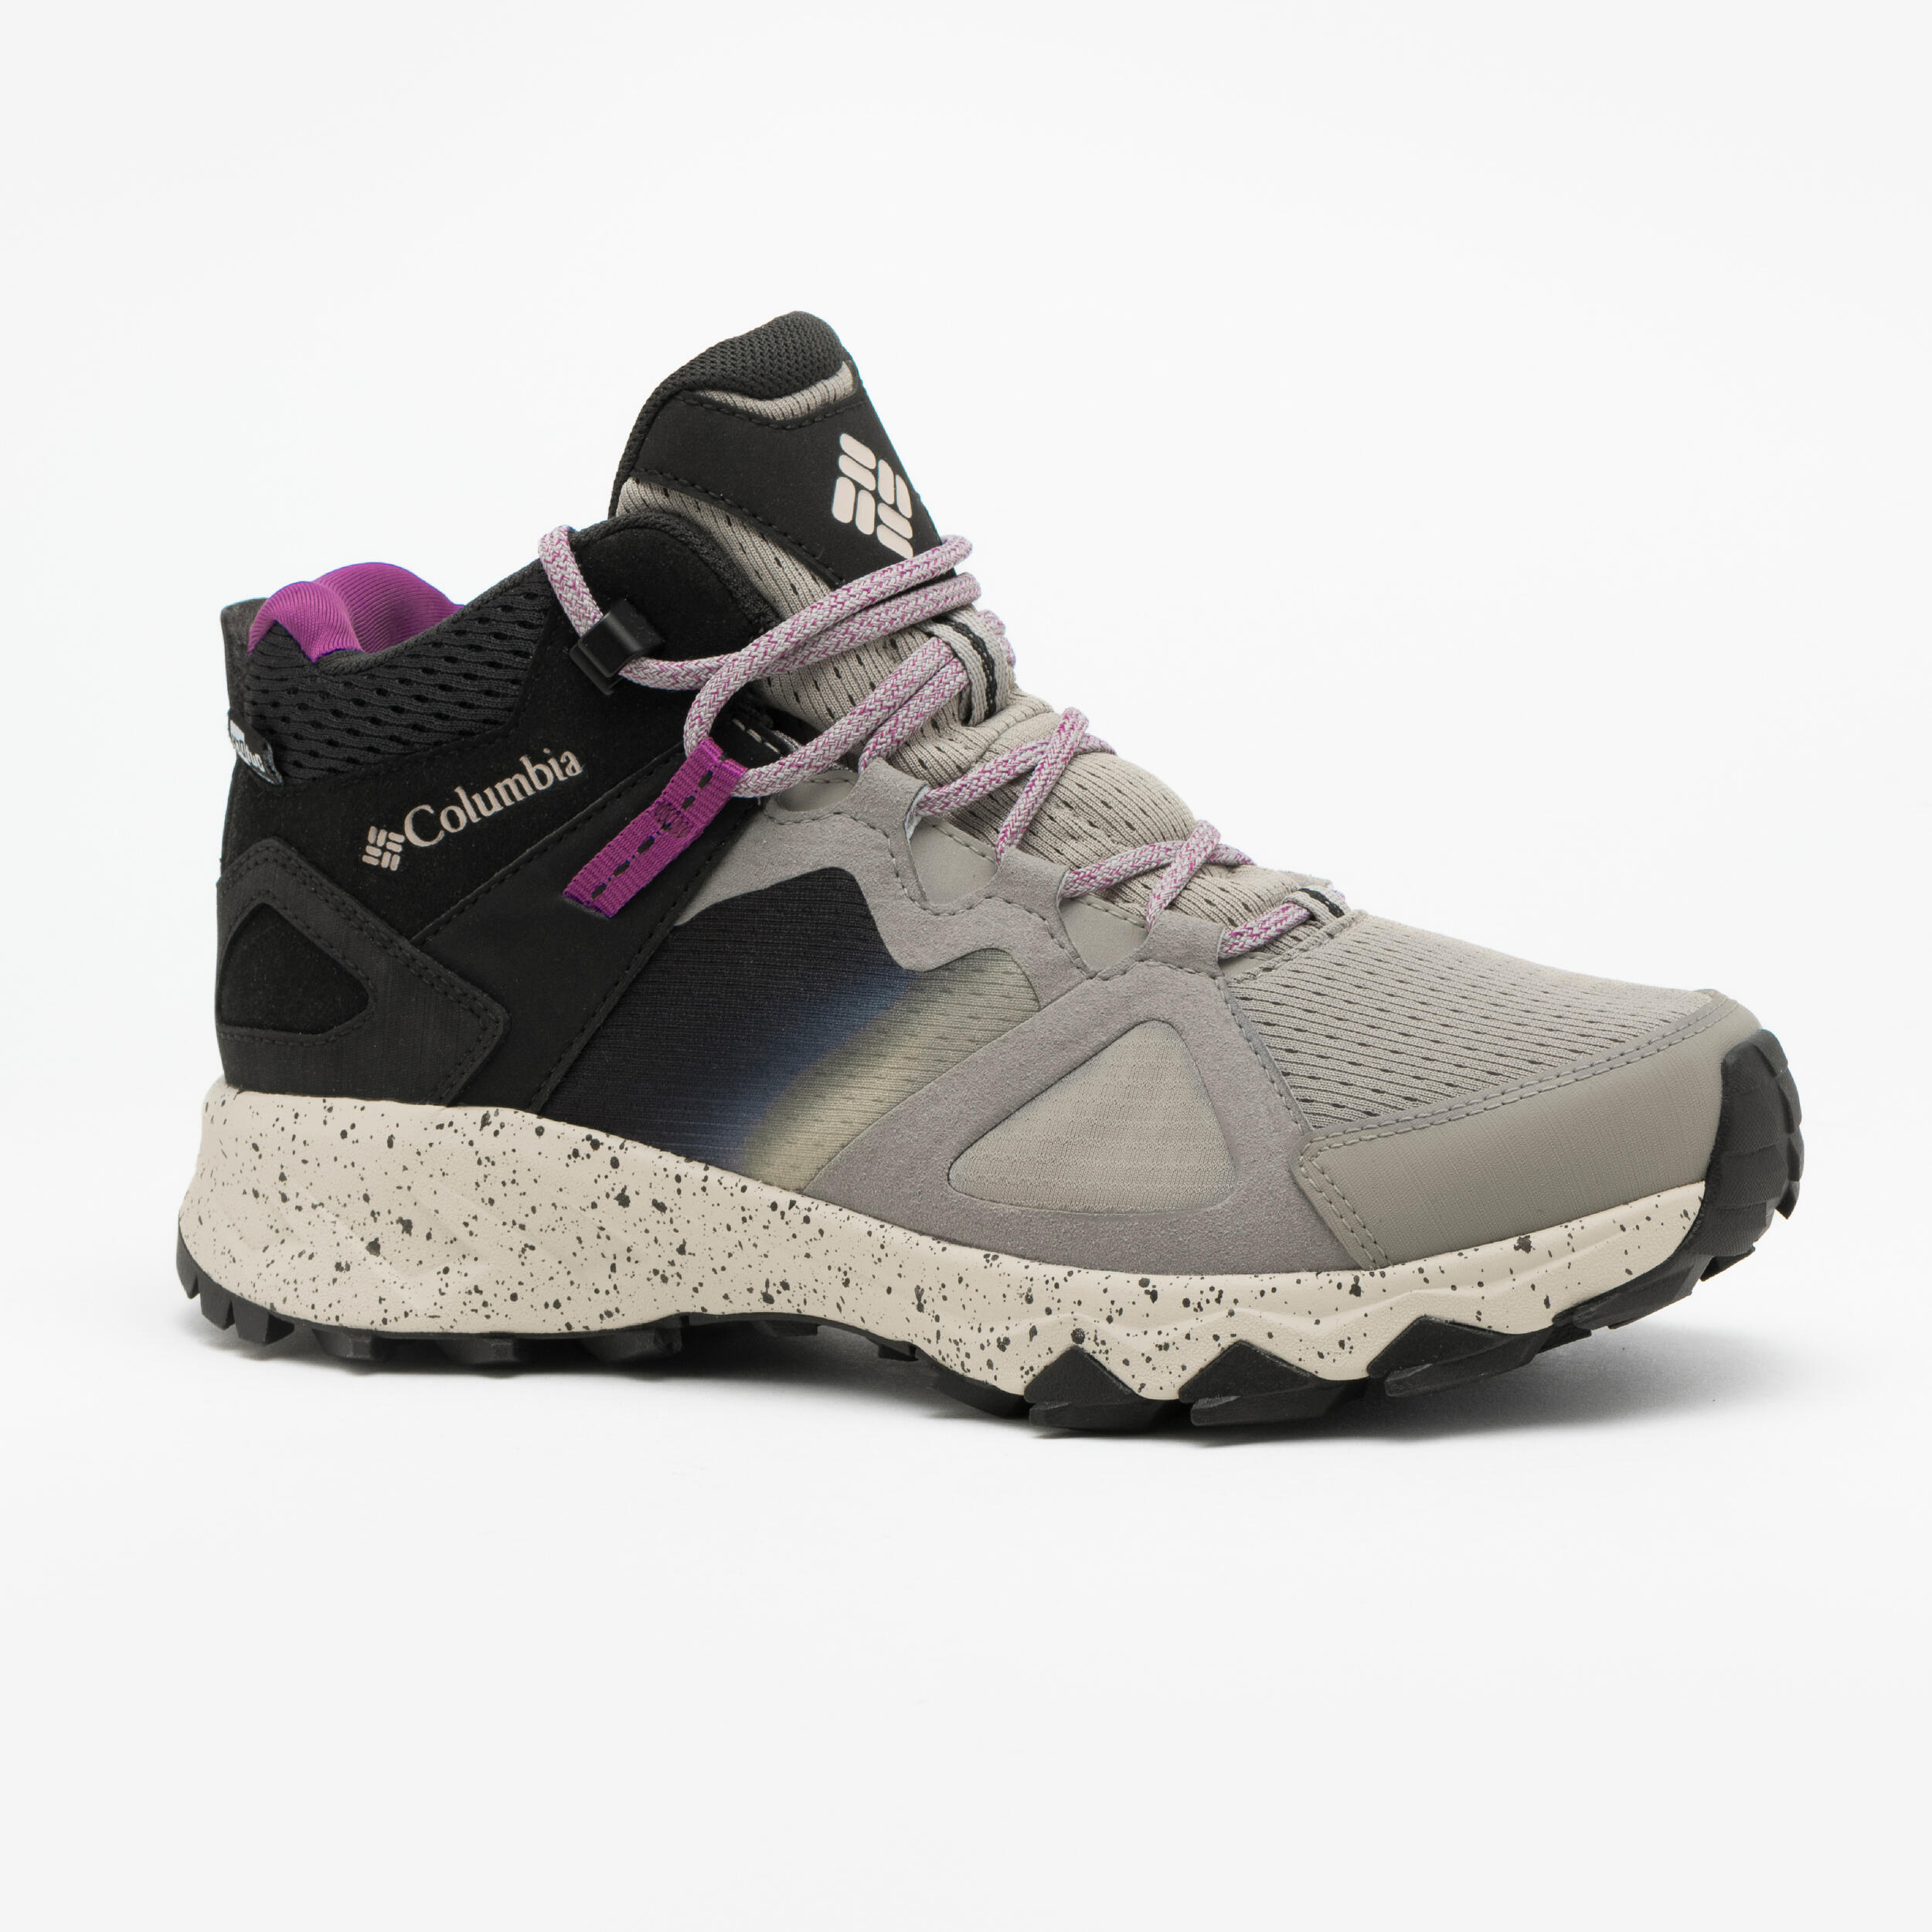 COLUMBIA Women's Hiking Waterproof Shoes - Columbia Hera Mid Outdry